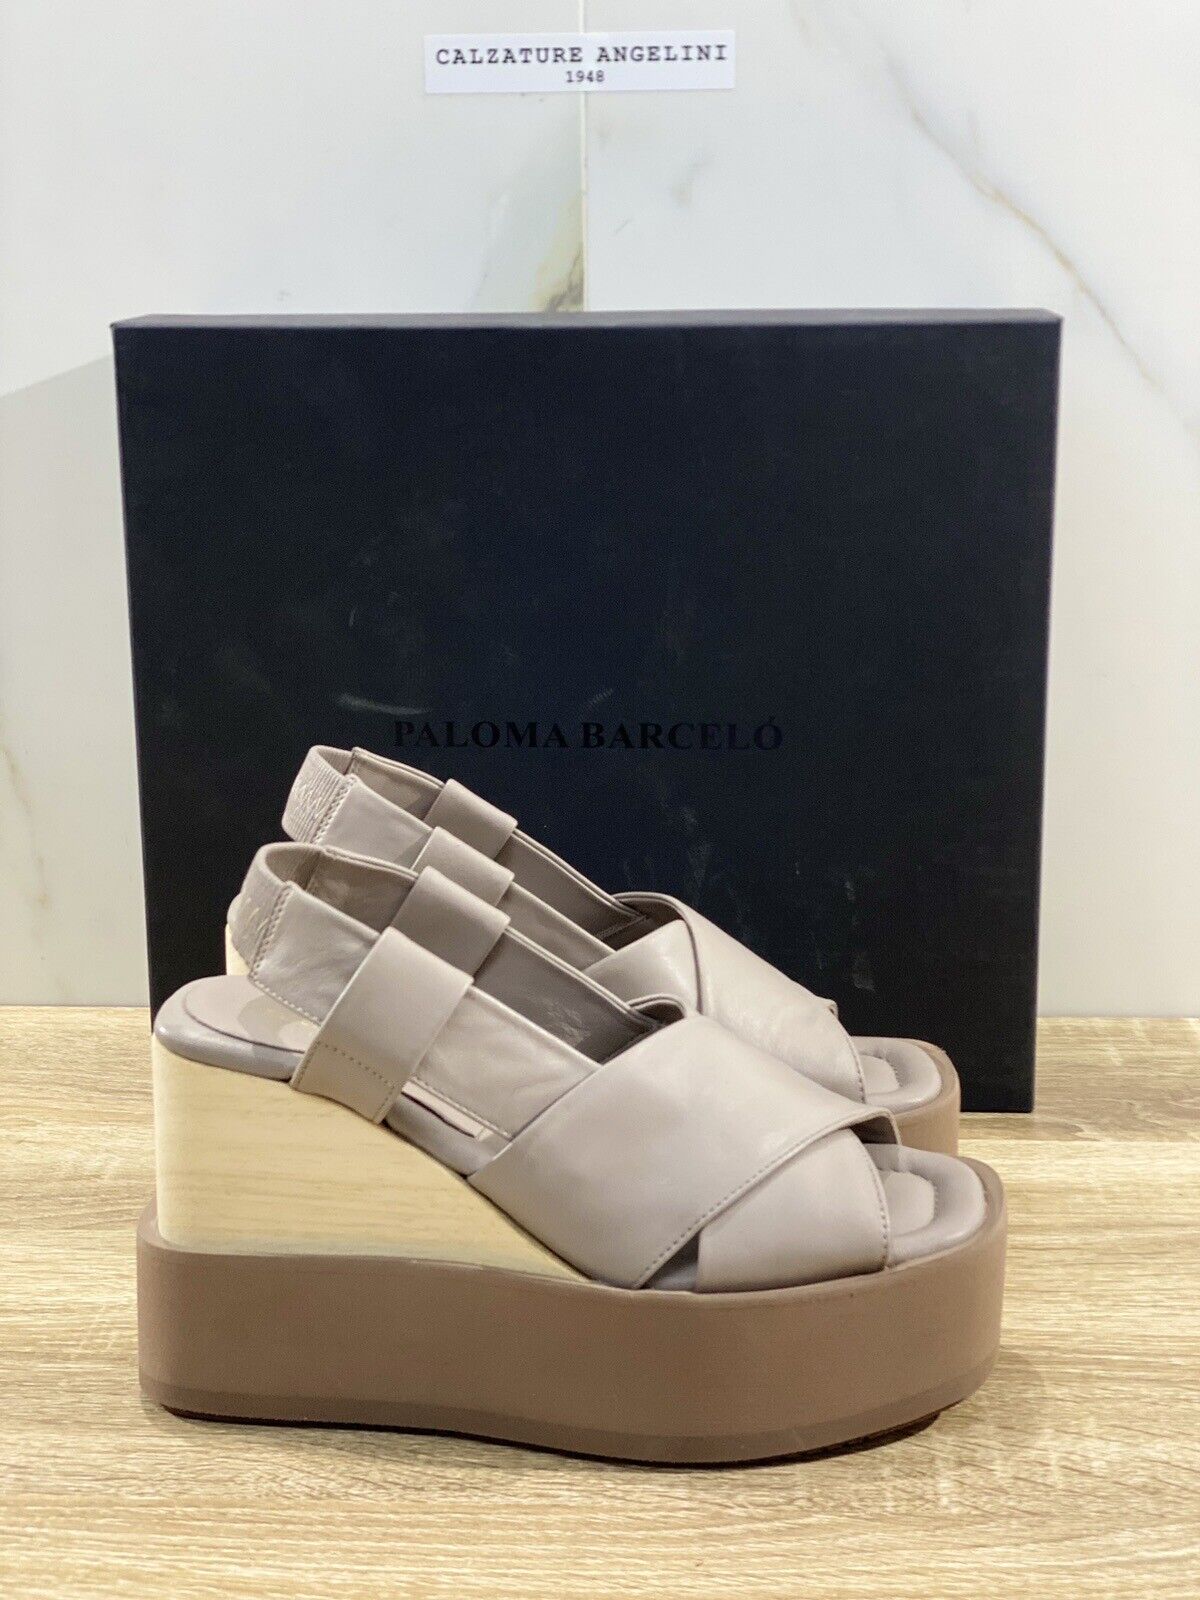 Paloma BARCELO’ Sandalo Donna Mao Pelle Tortora Luxury Shoes 37